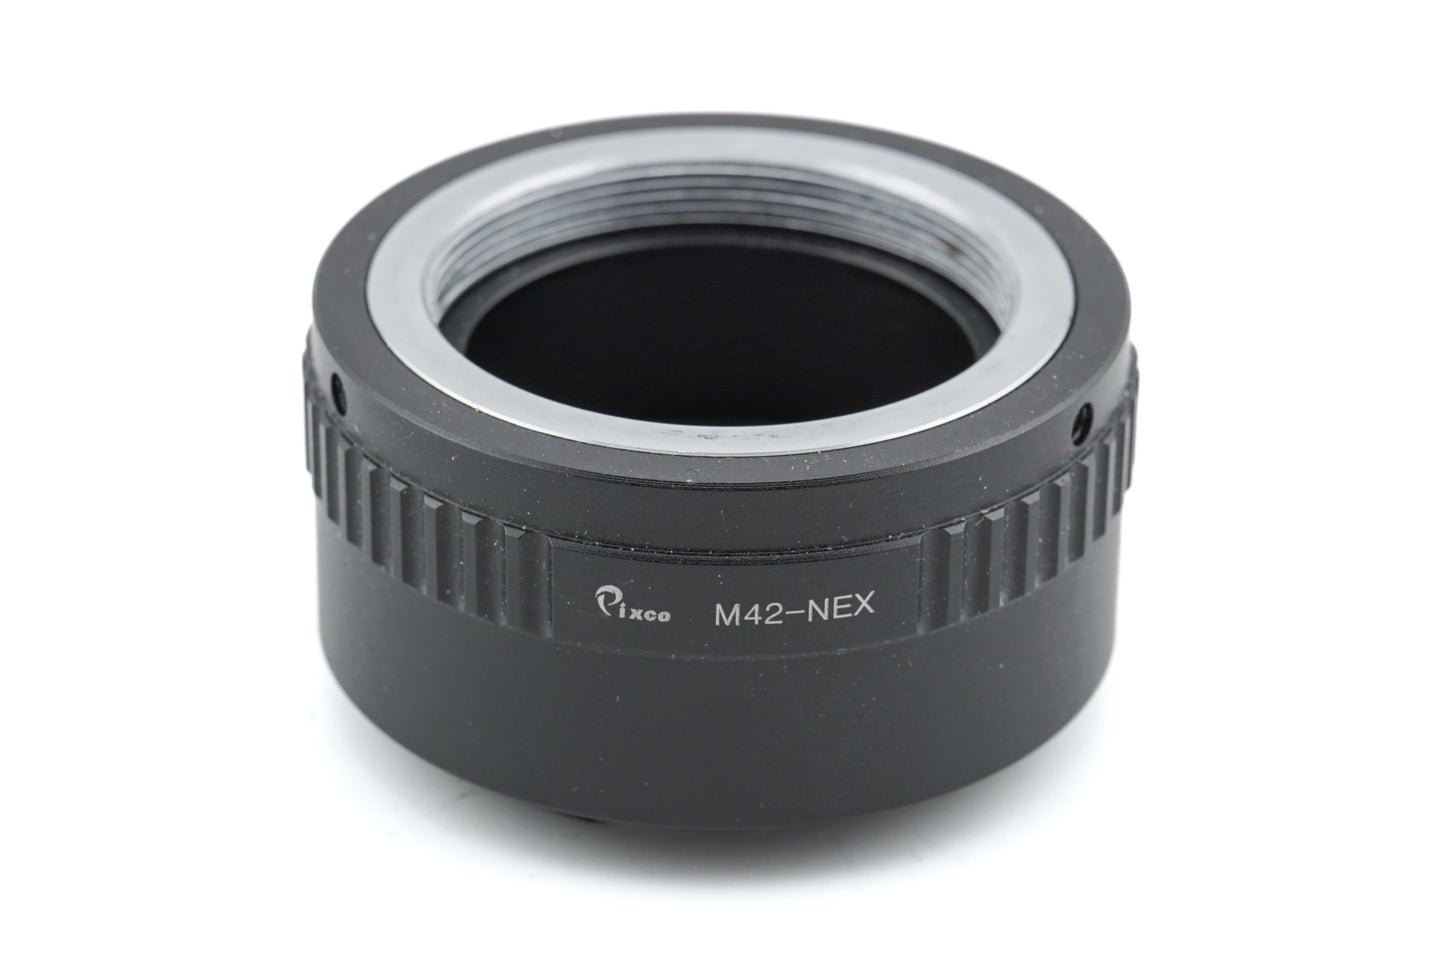 Pixco M42 - Sony E (M42 - NEX) Adapter - Lens Adapter